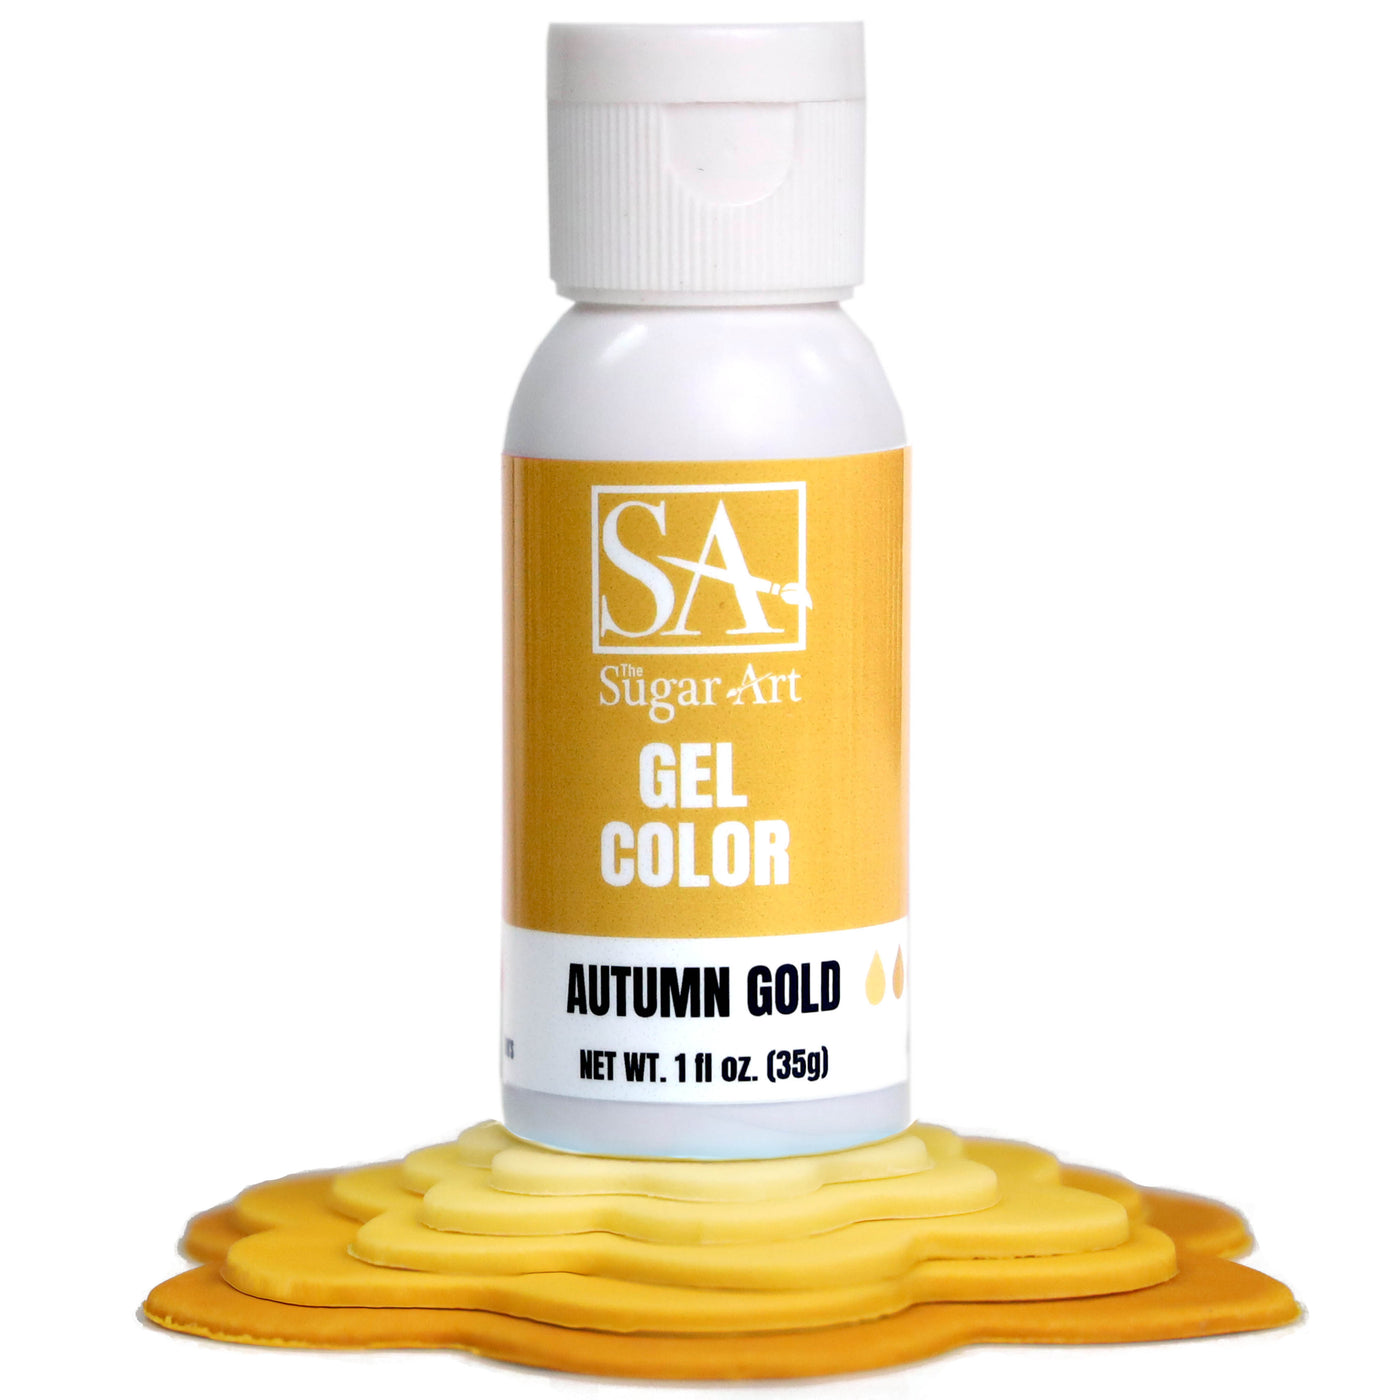 Gold Gel Color - The Sugar Art, Inc.